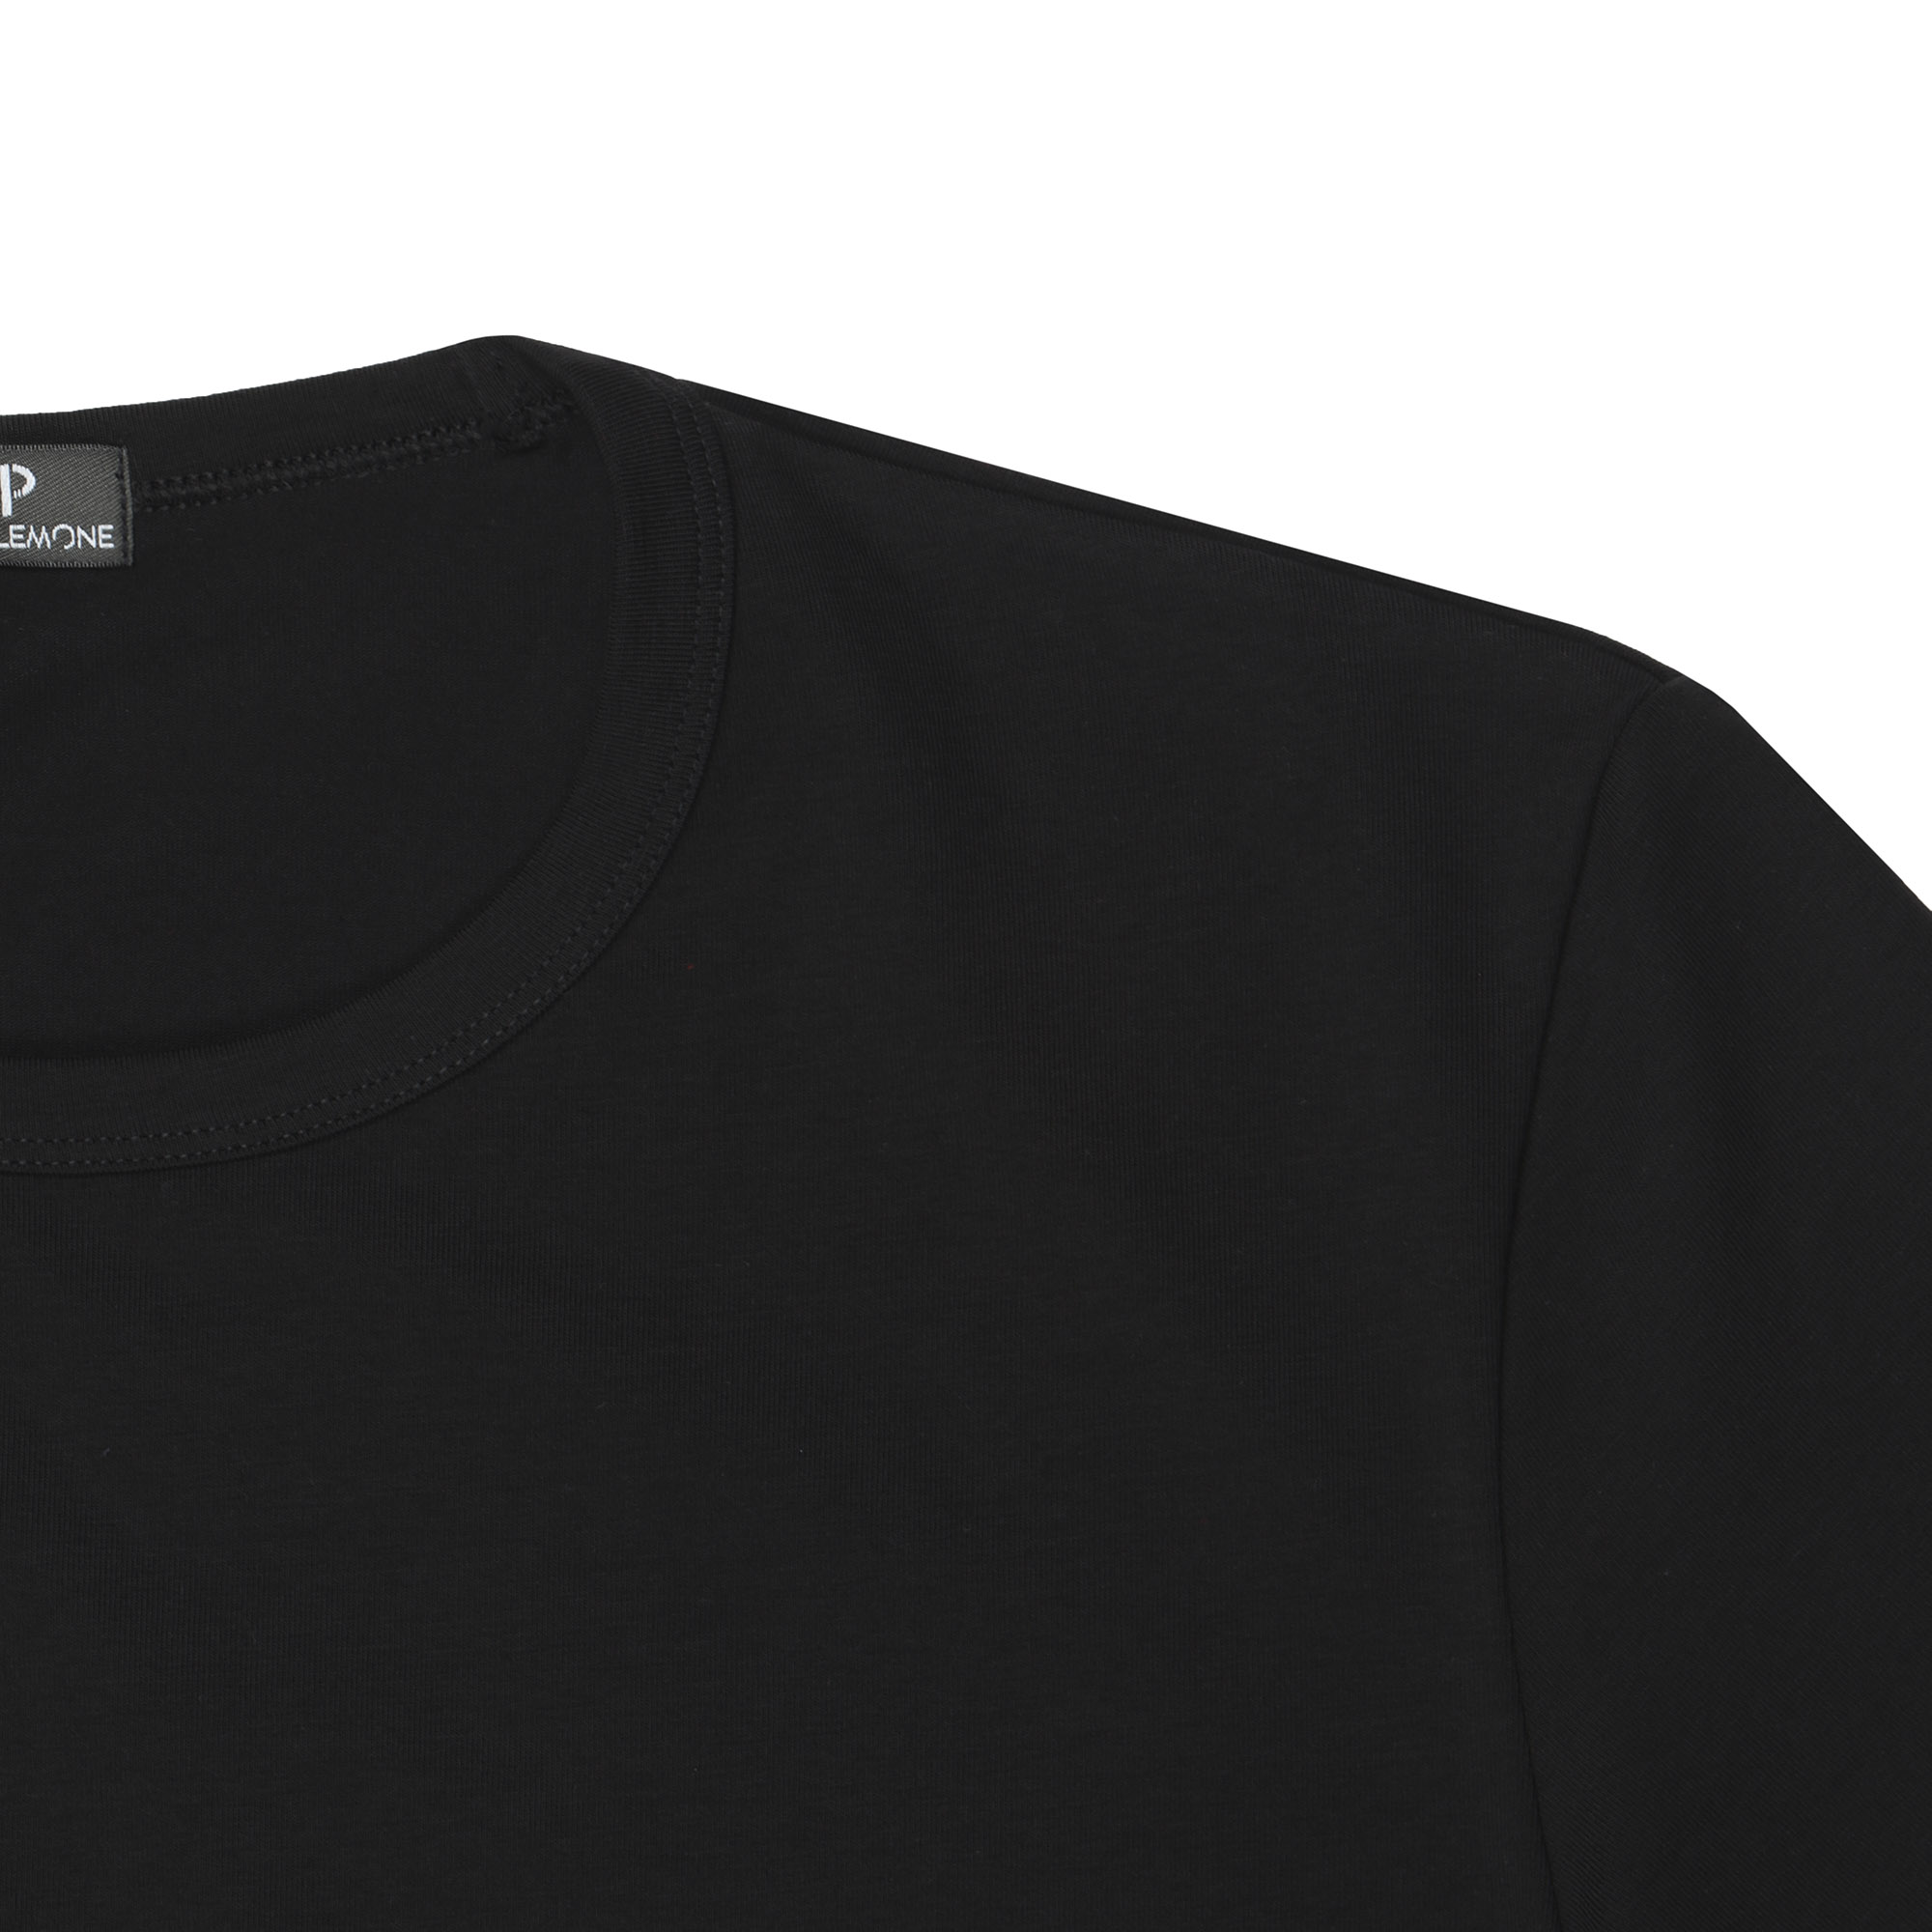 Мужская футболка Pantelemone MF-914 54 черная, цвет черный, размер 54 - фото 2